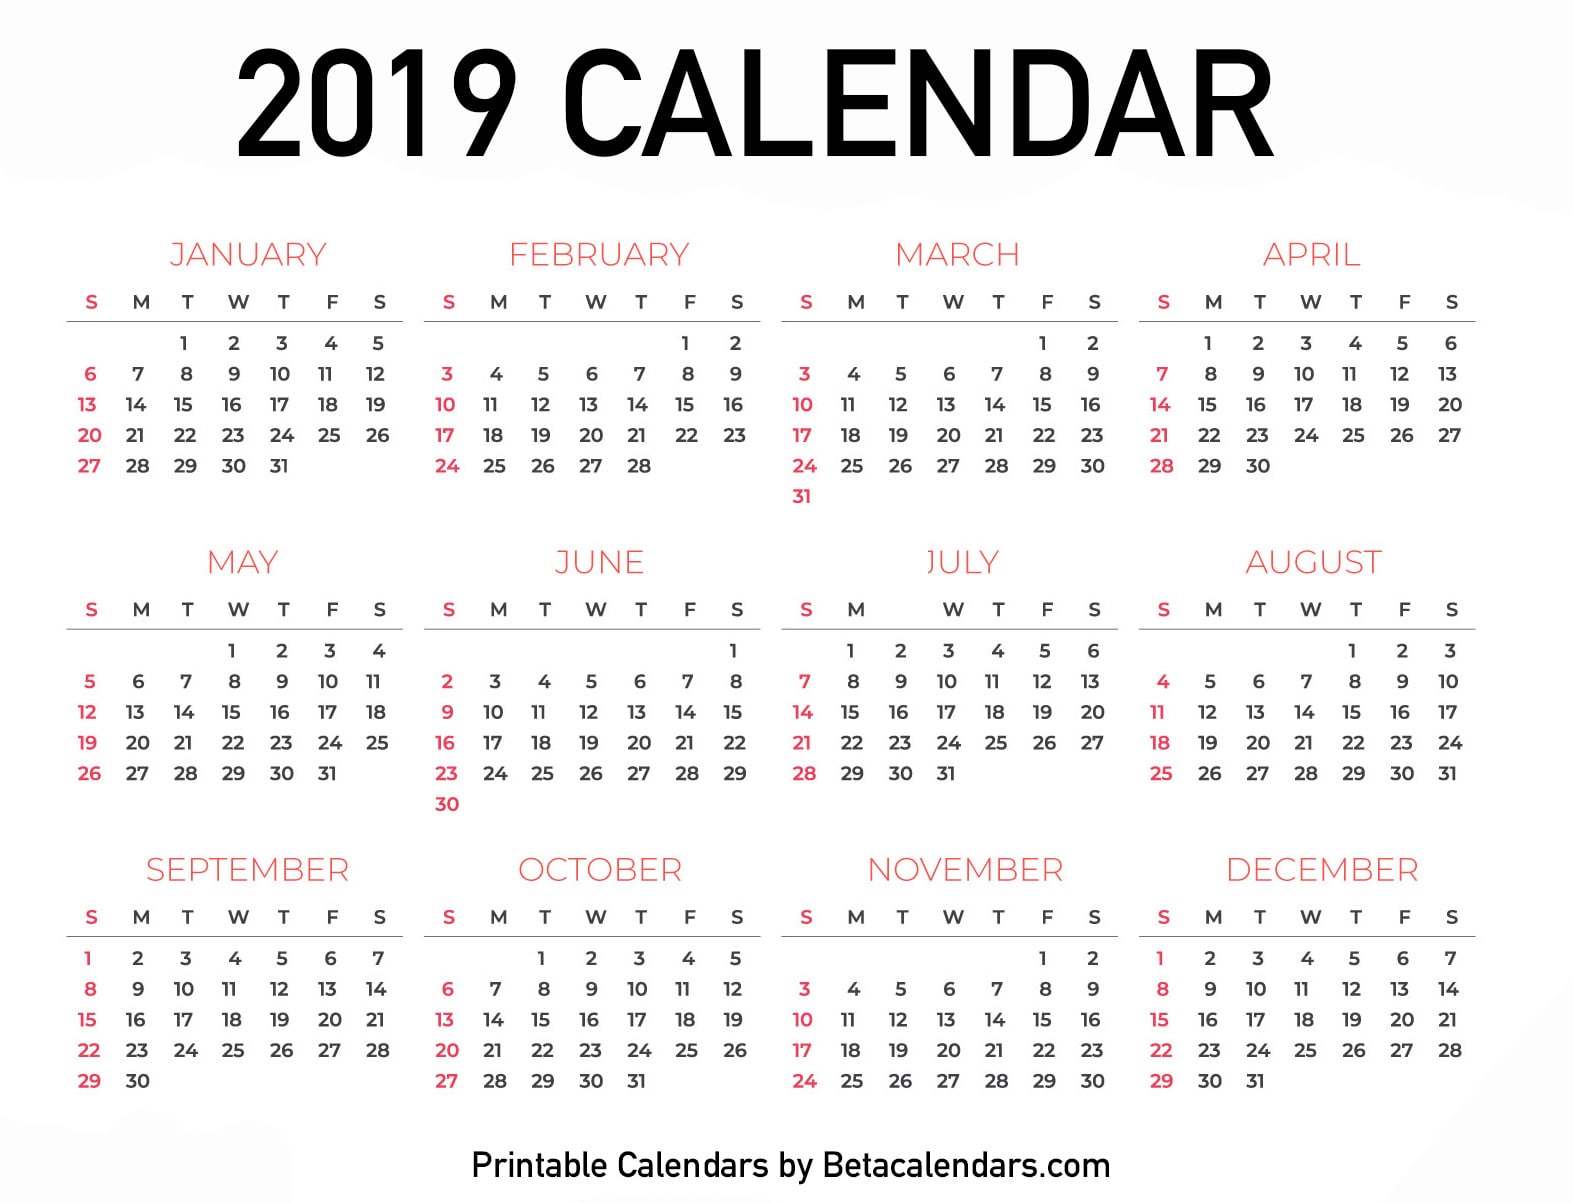 Pin On Calendar 2019 - Bank2home.com